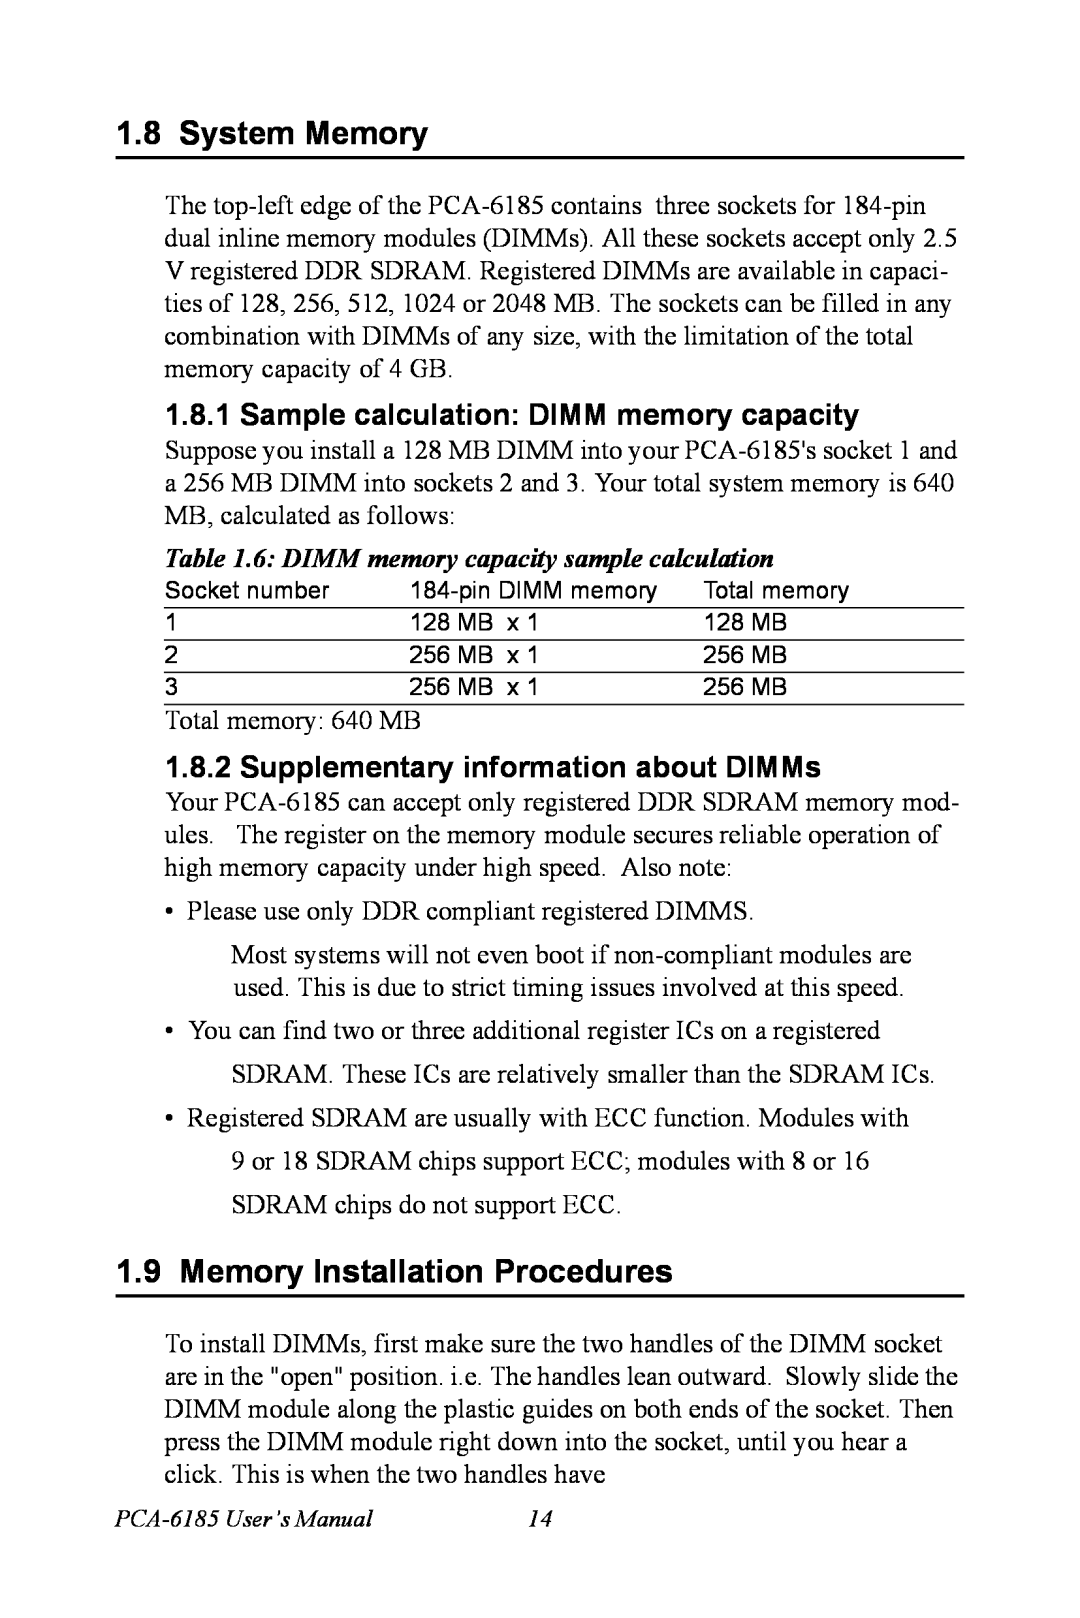 Advantech PCA-6185 user manual System Memory, Memory Installation Procedures, Sample calculation DIMM memory capacity 